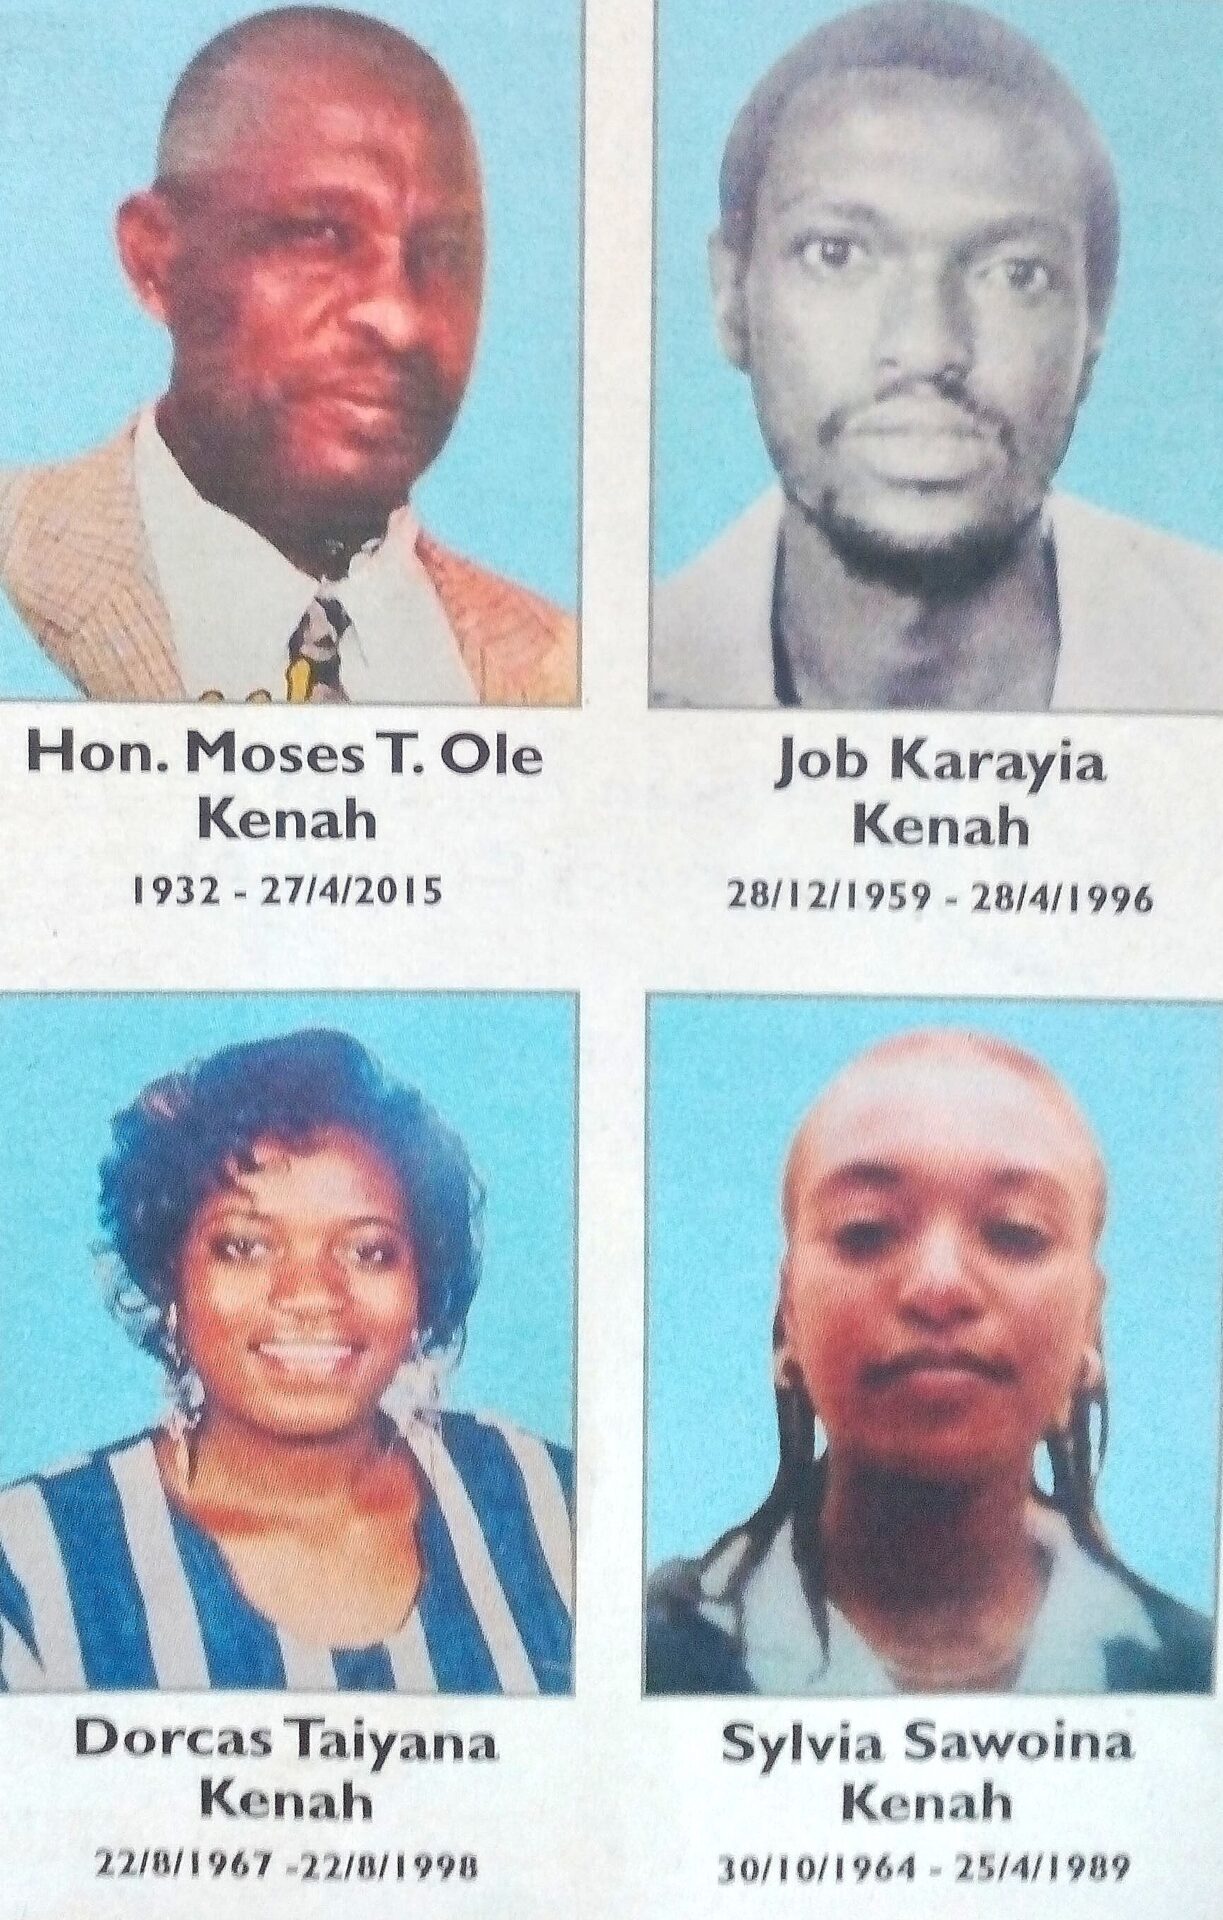 Obituary Image of Hon Moses Ole Kenah, Job, Dorcas and Sylvia